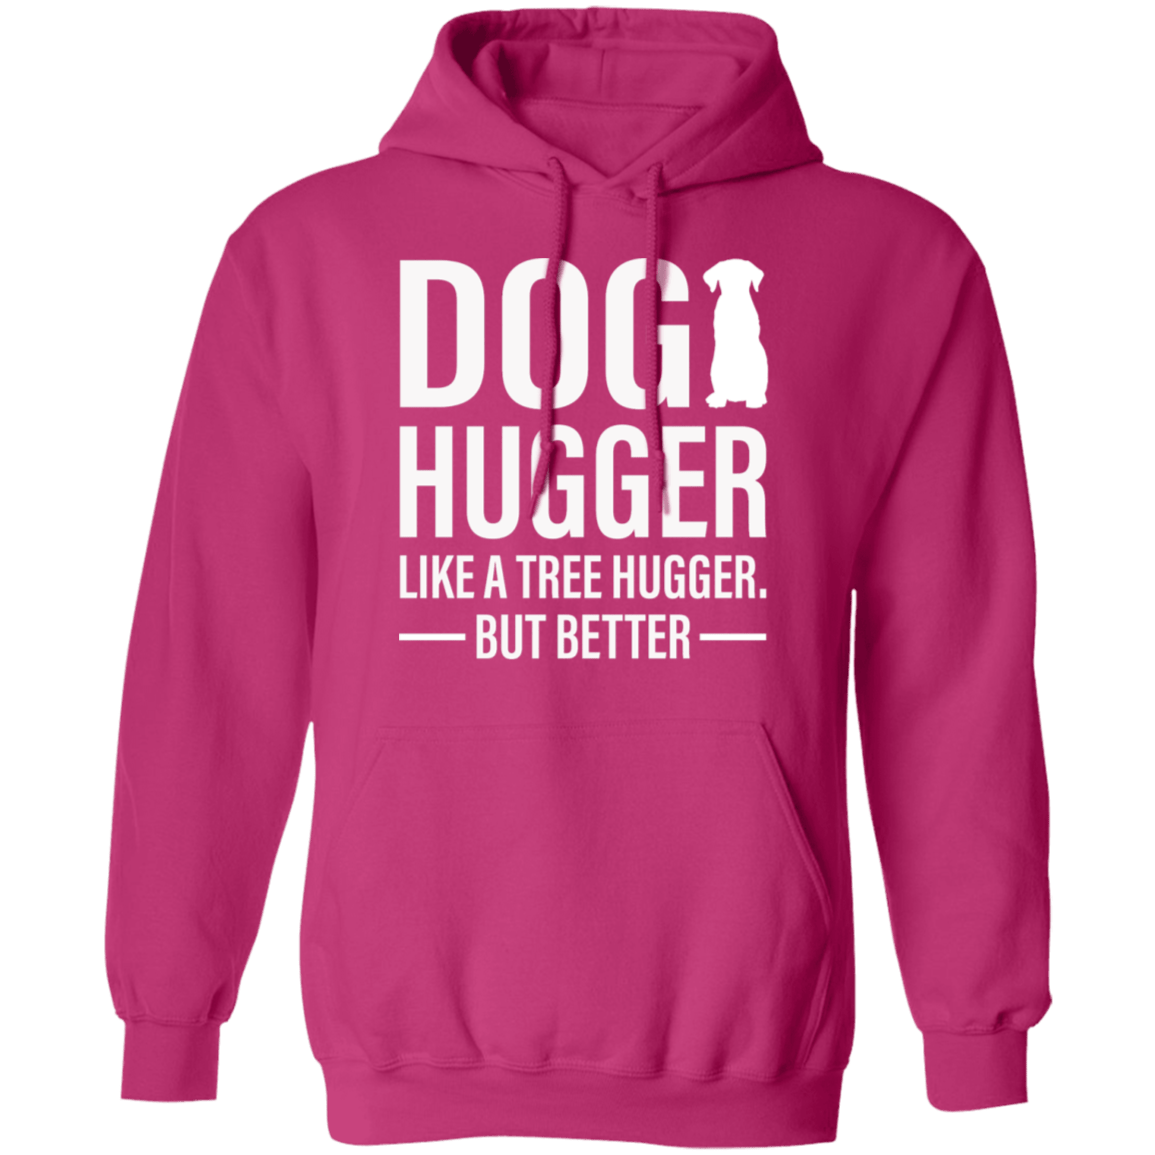 Dog Hugger - Hoodie.